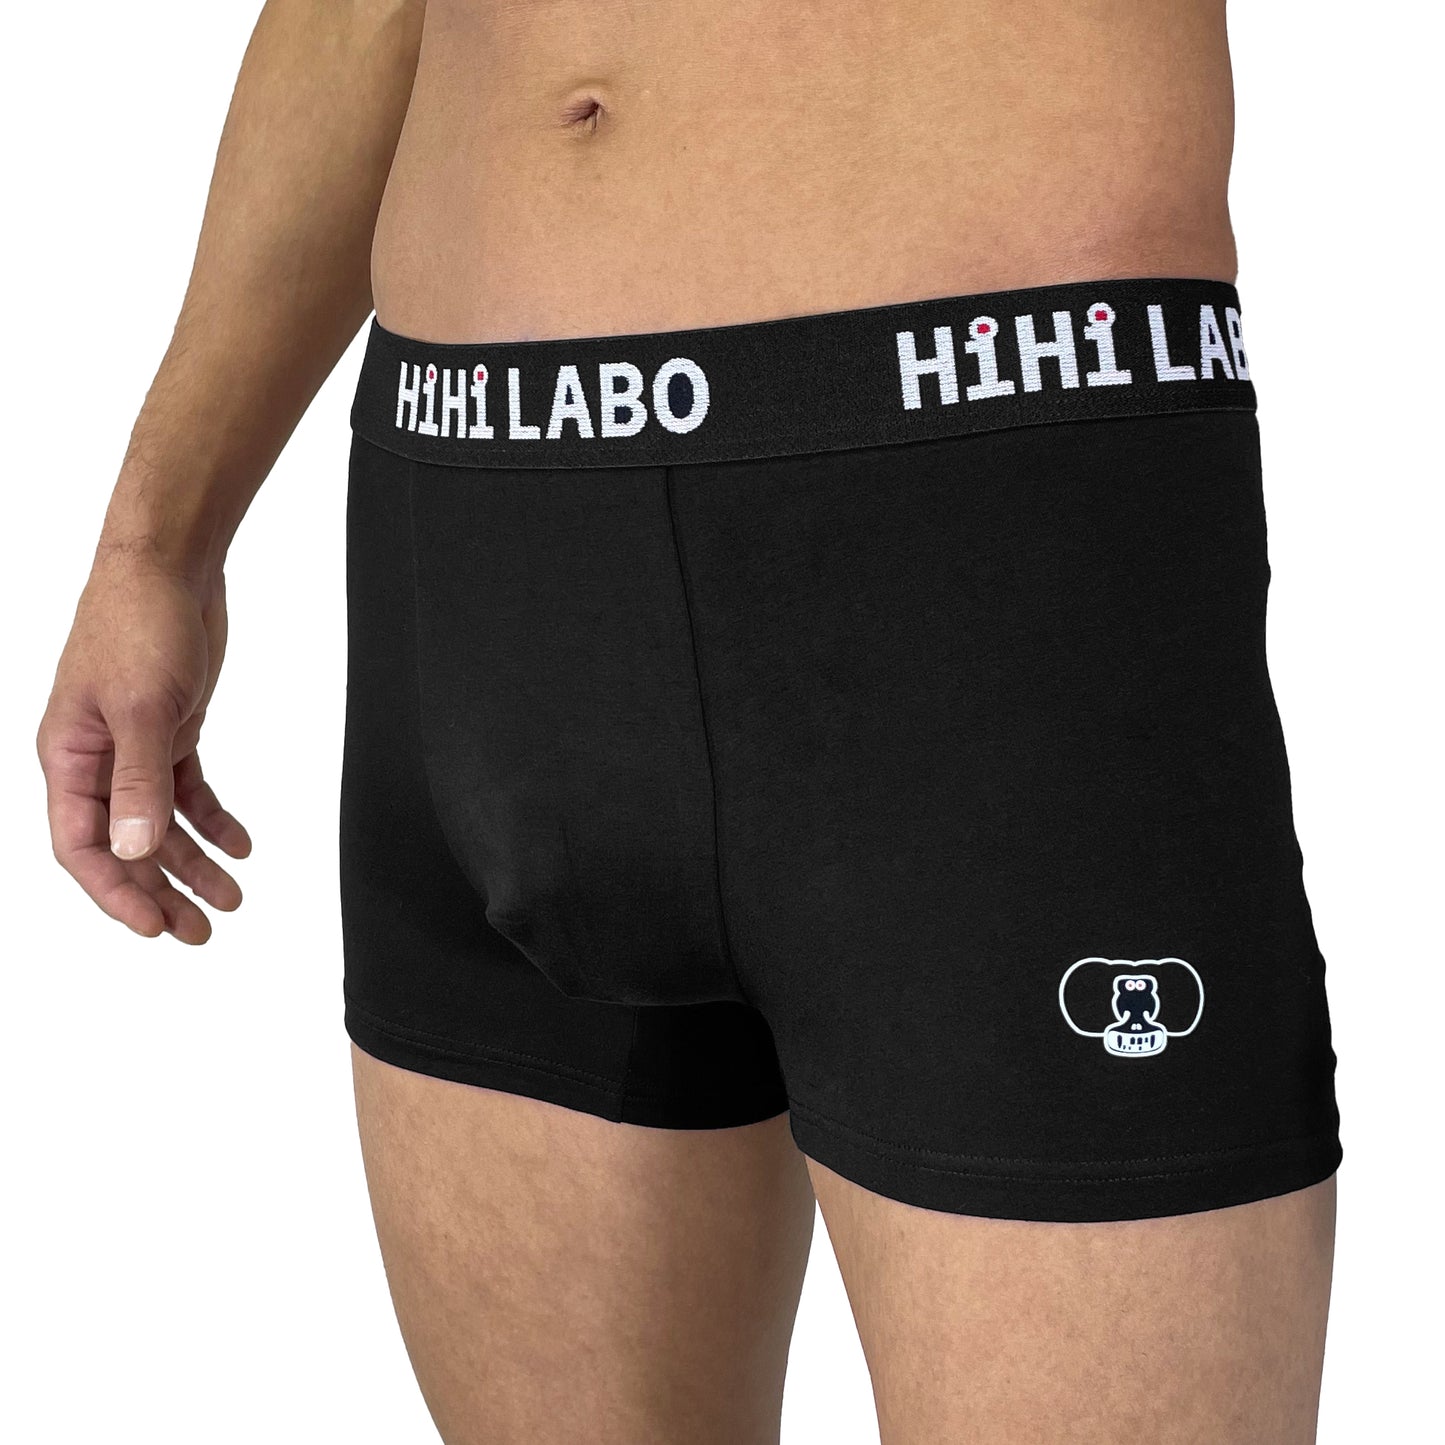 HiHi LABO Boxer Underwear for Men